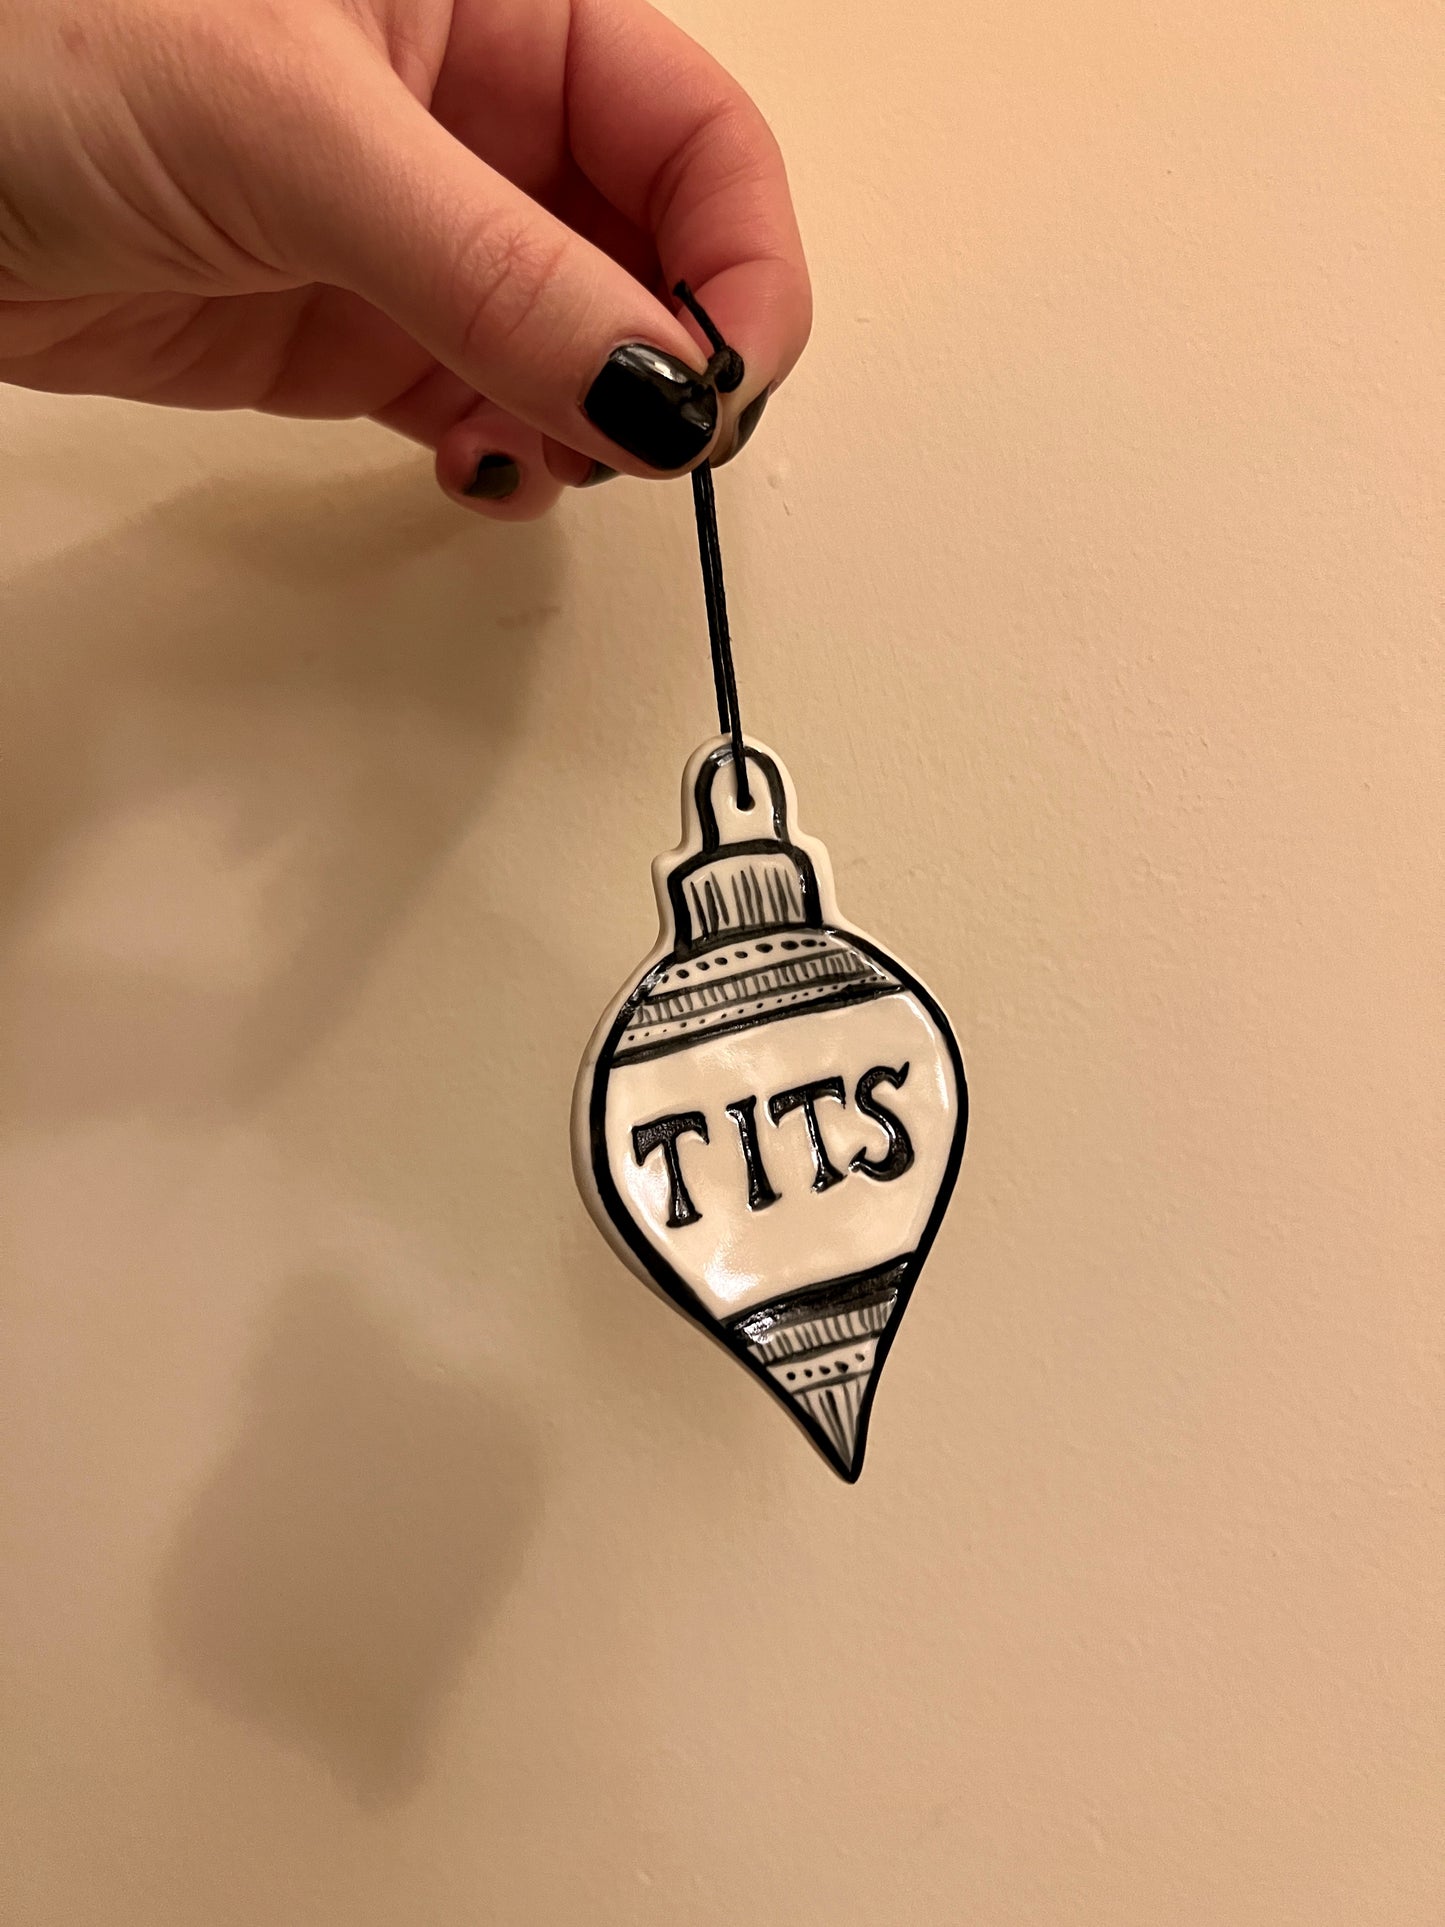 Tits Decoration